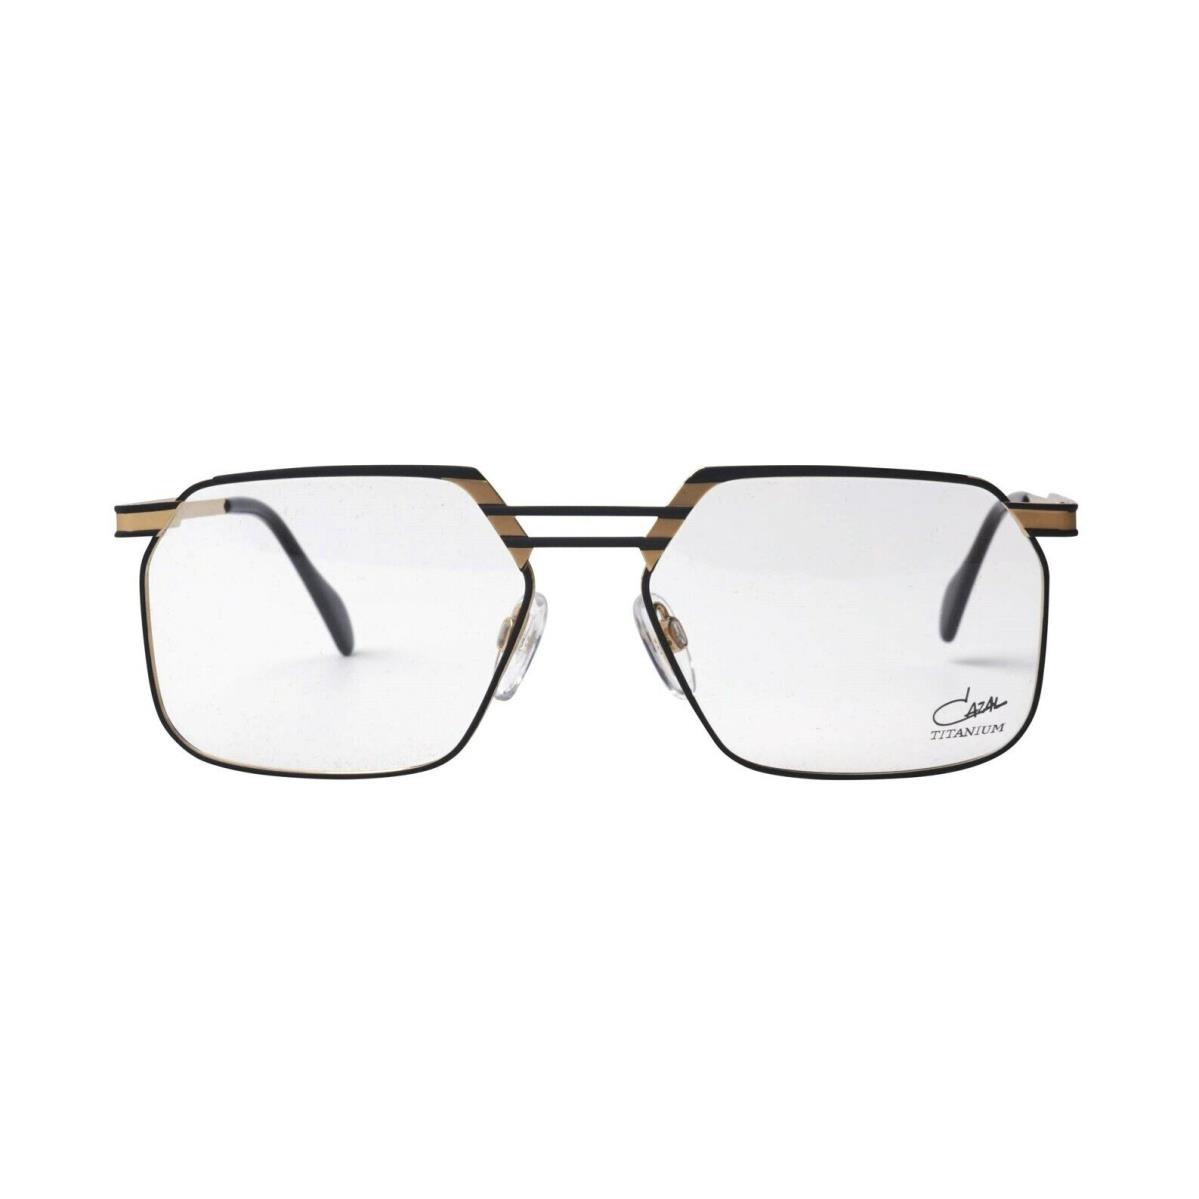 Cazal 760 Black Gold 001 Eyeglasses